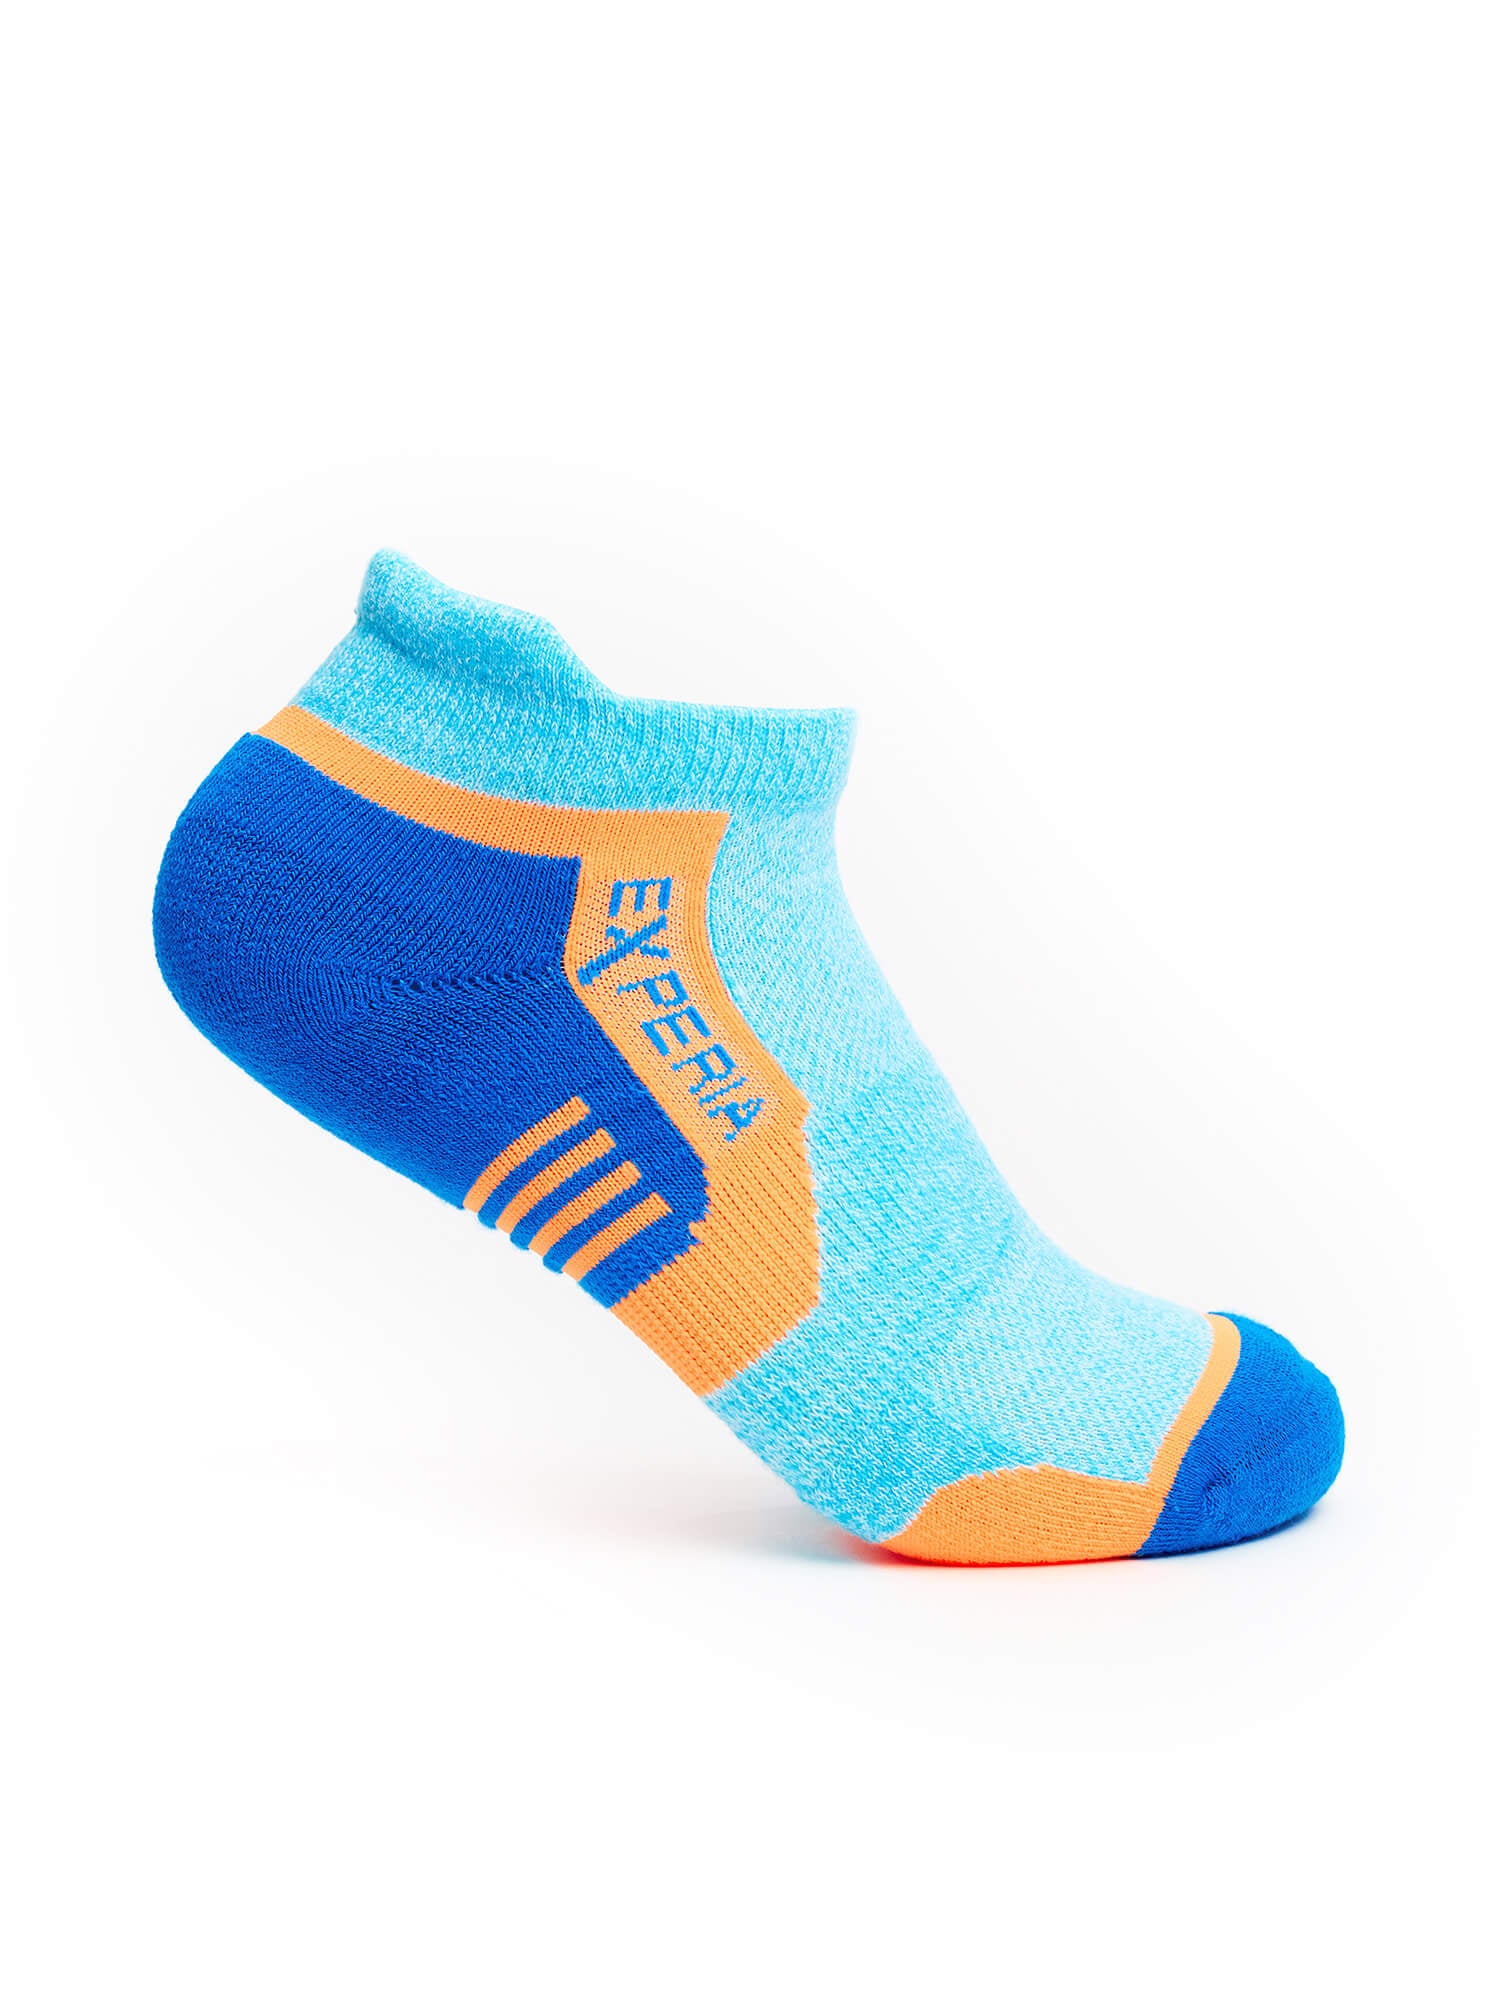 Thorlos Experia Repreve Low Cut Socks in Blue